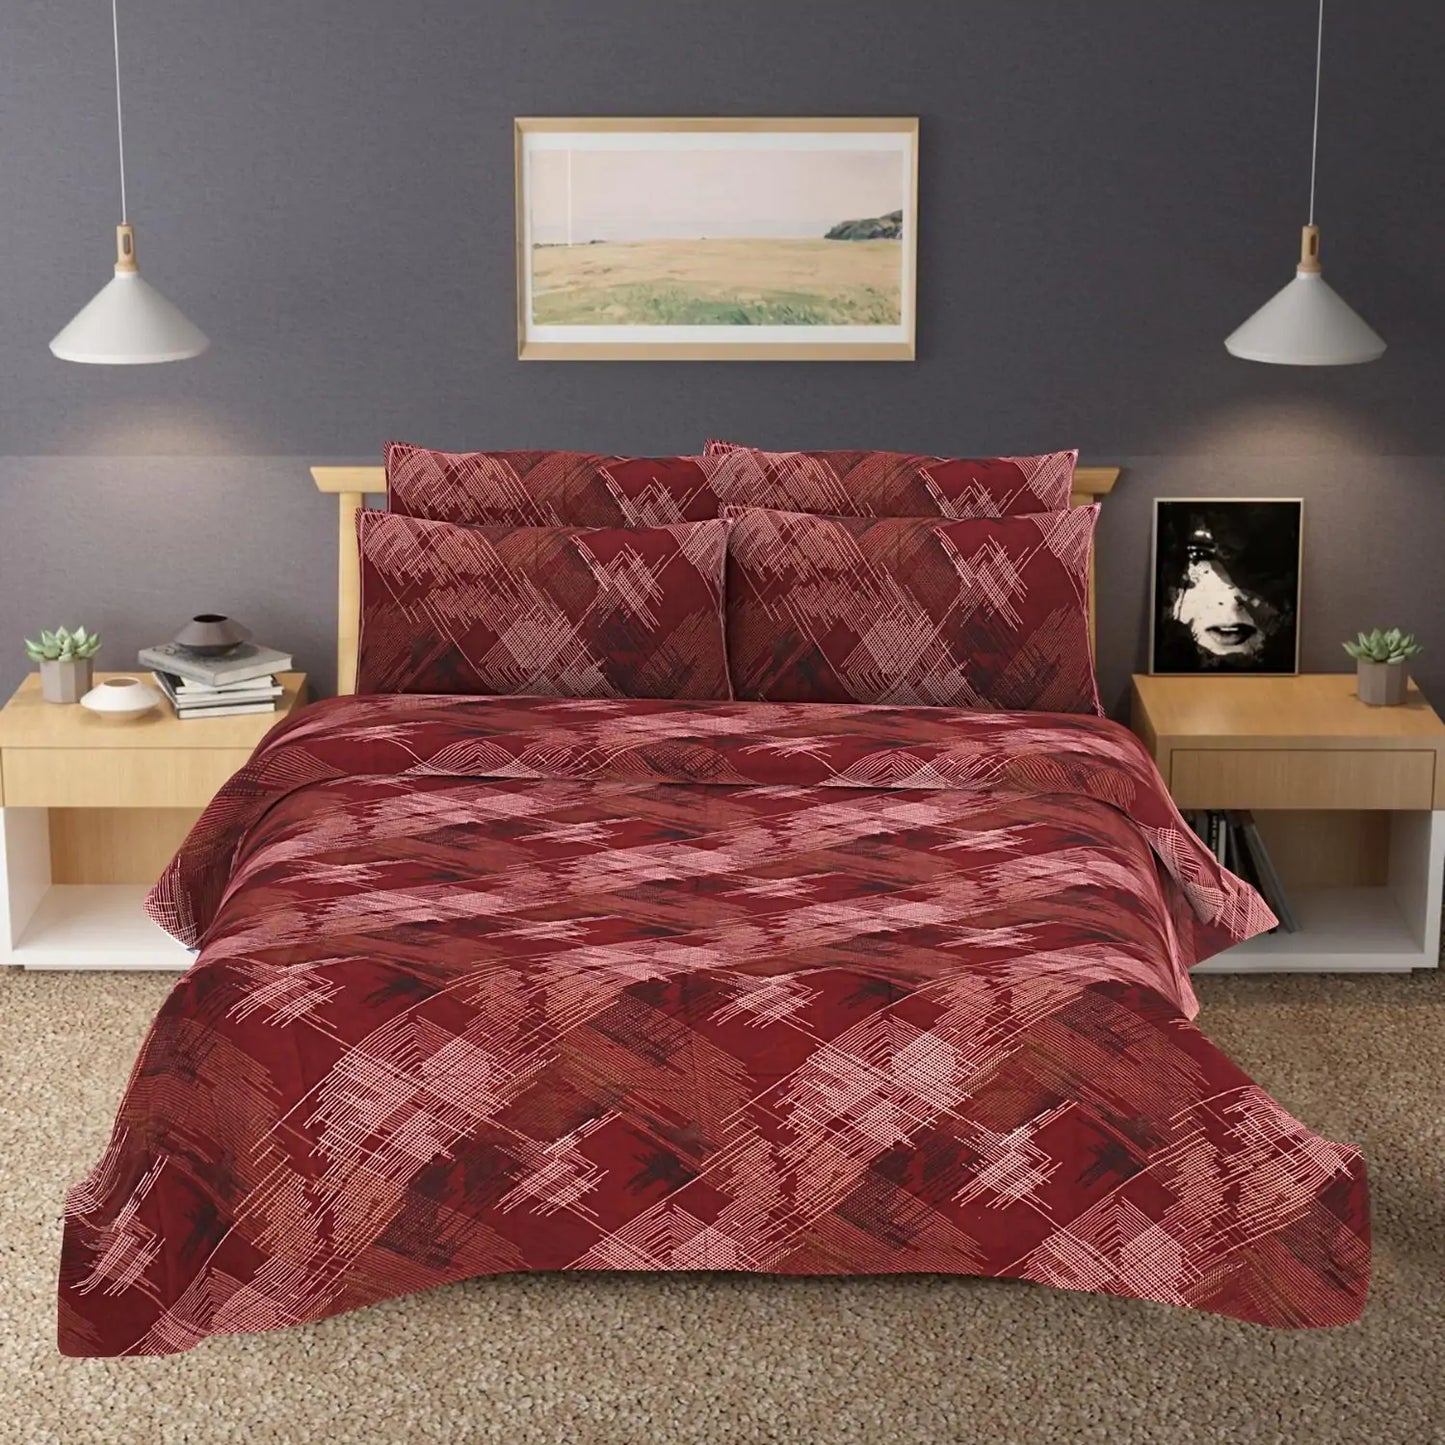 Marina Maple Printed Cotton Bedsheet